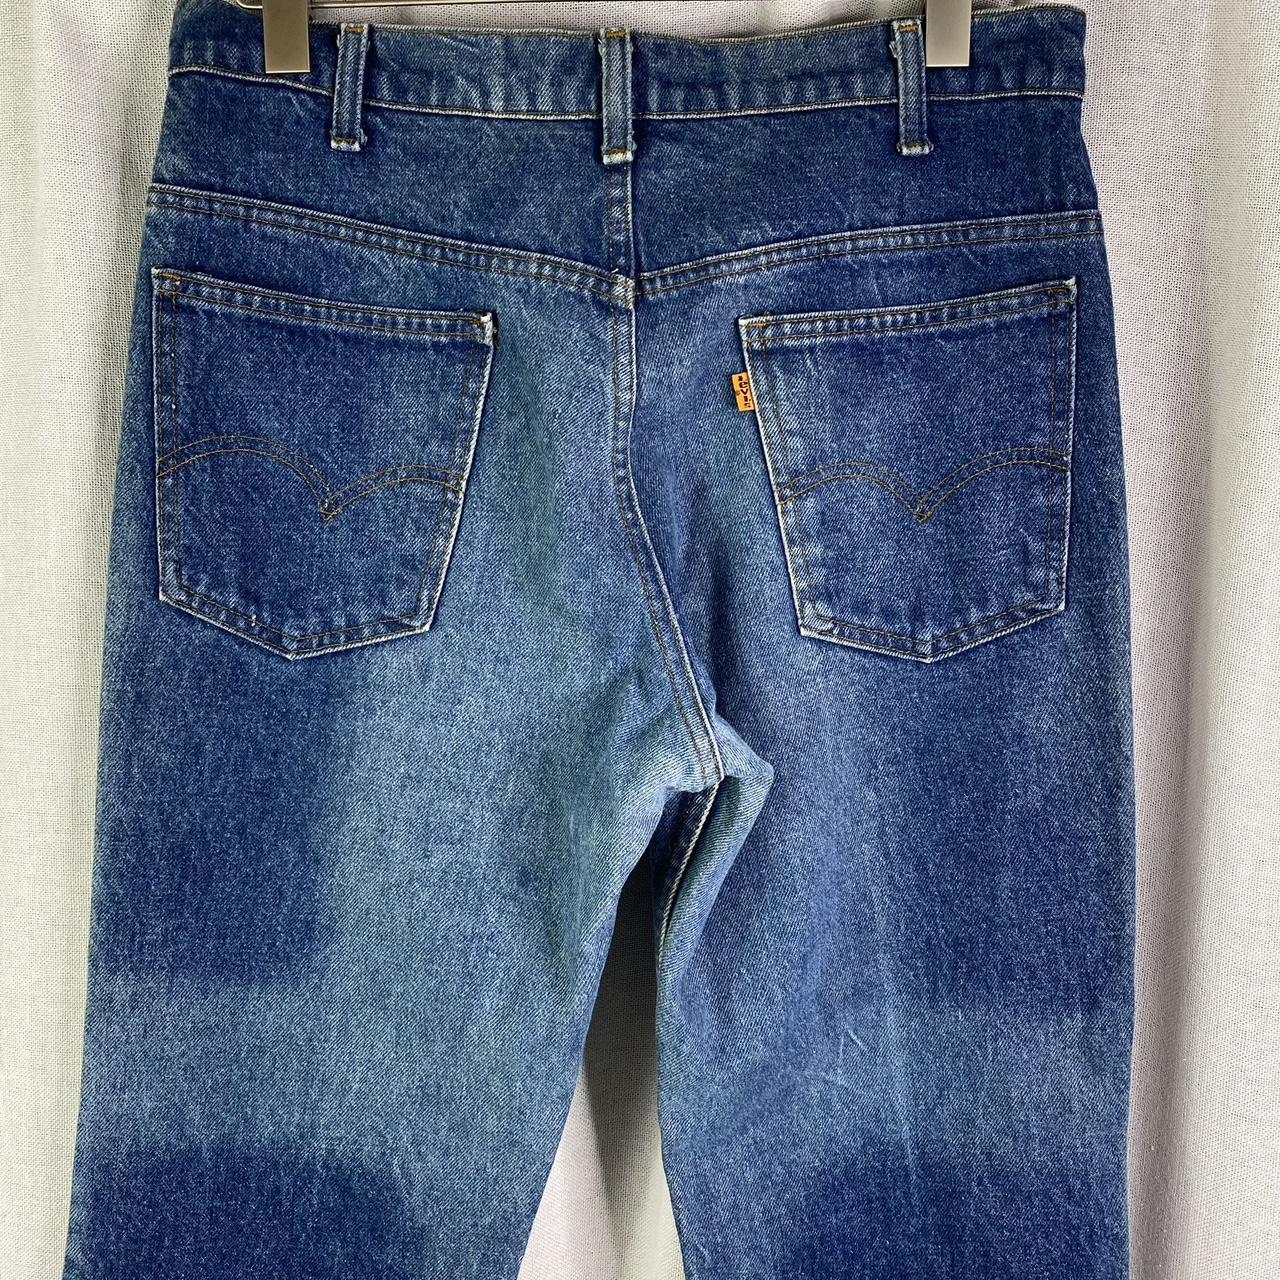 Vintage Levis Jeans Orange Tab 34x34 684 Super... - Depop